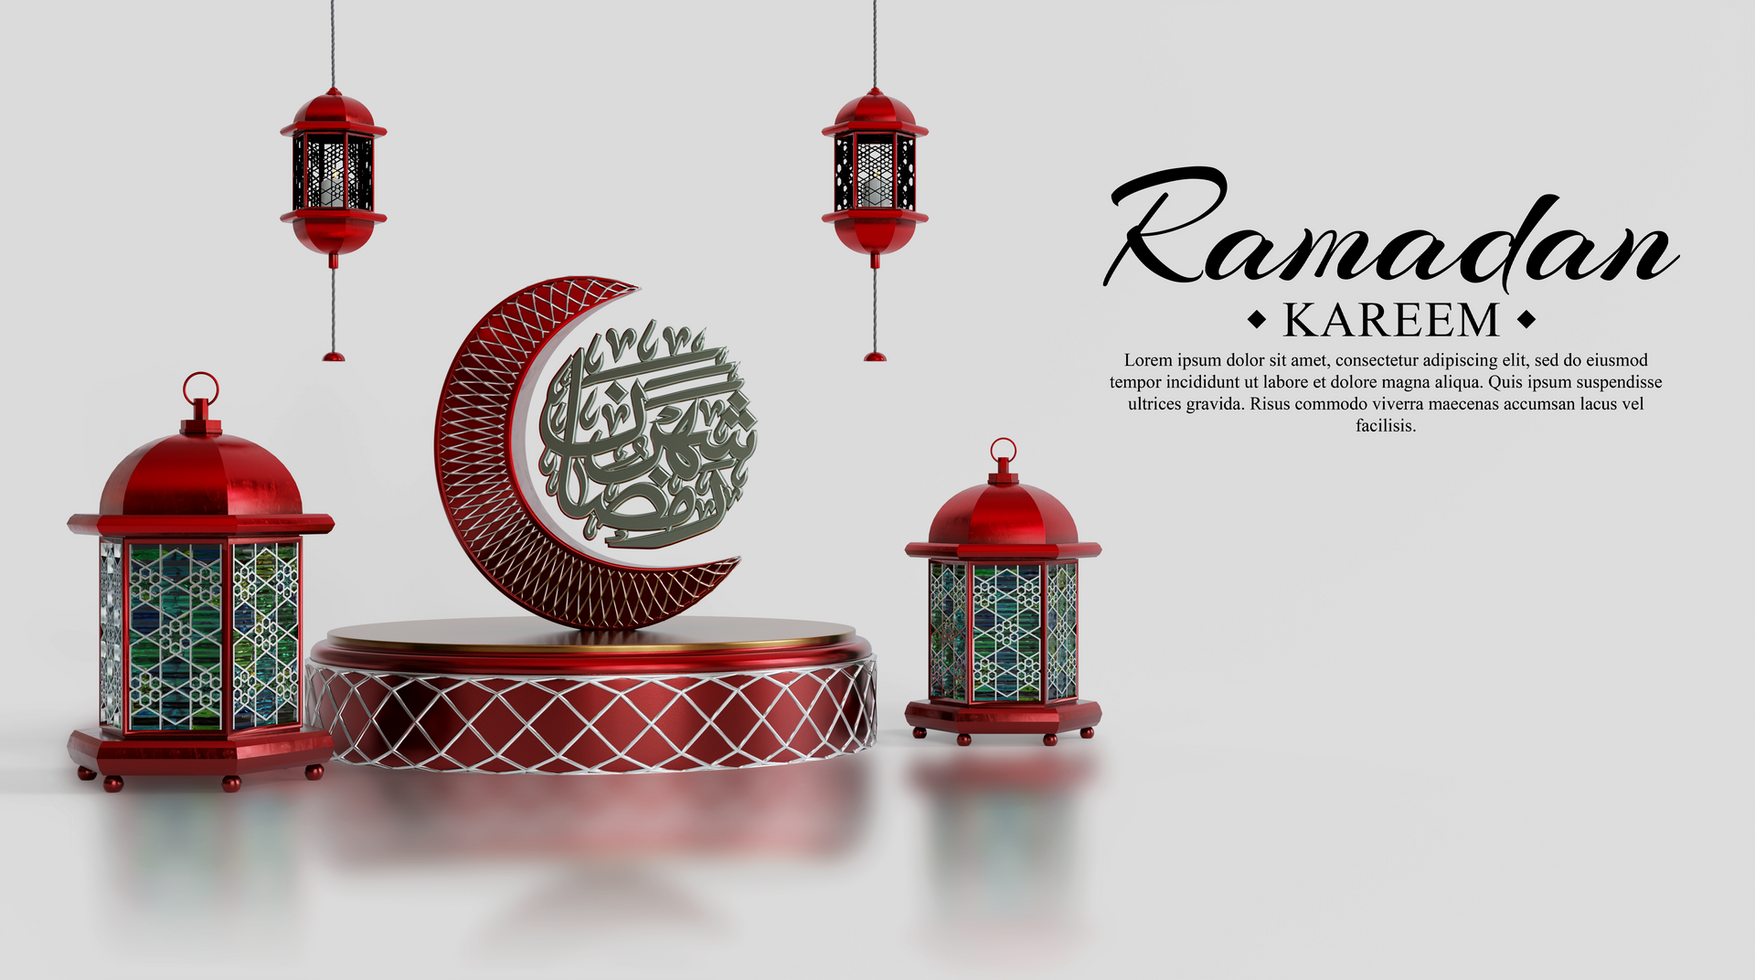 luxuoso Ramadã Karem fundo psd modelo